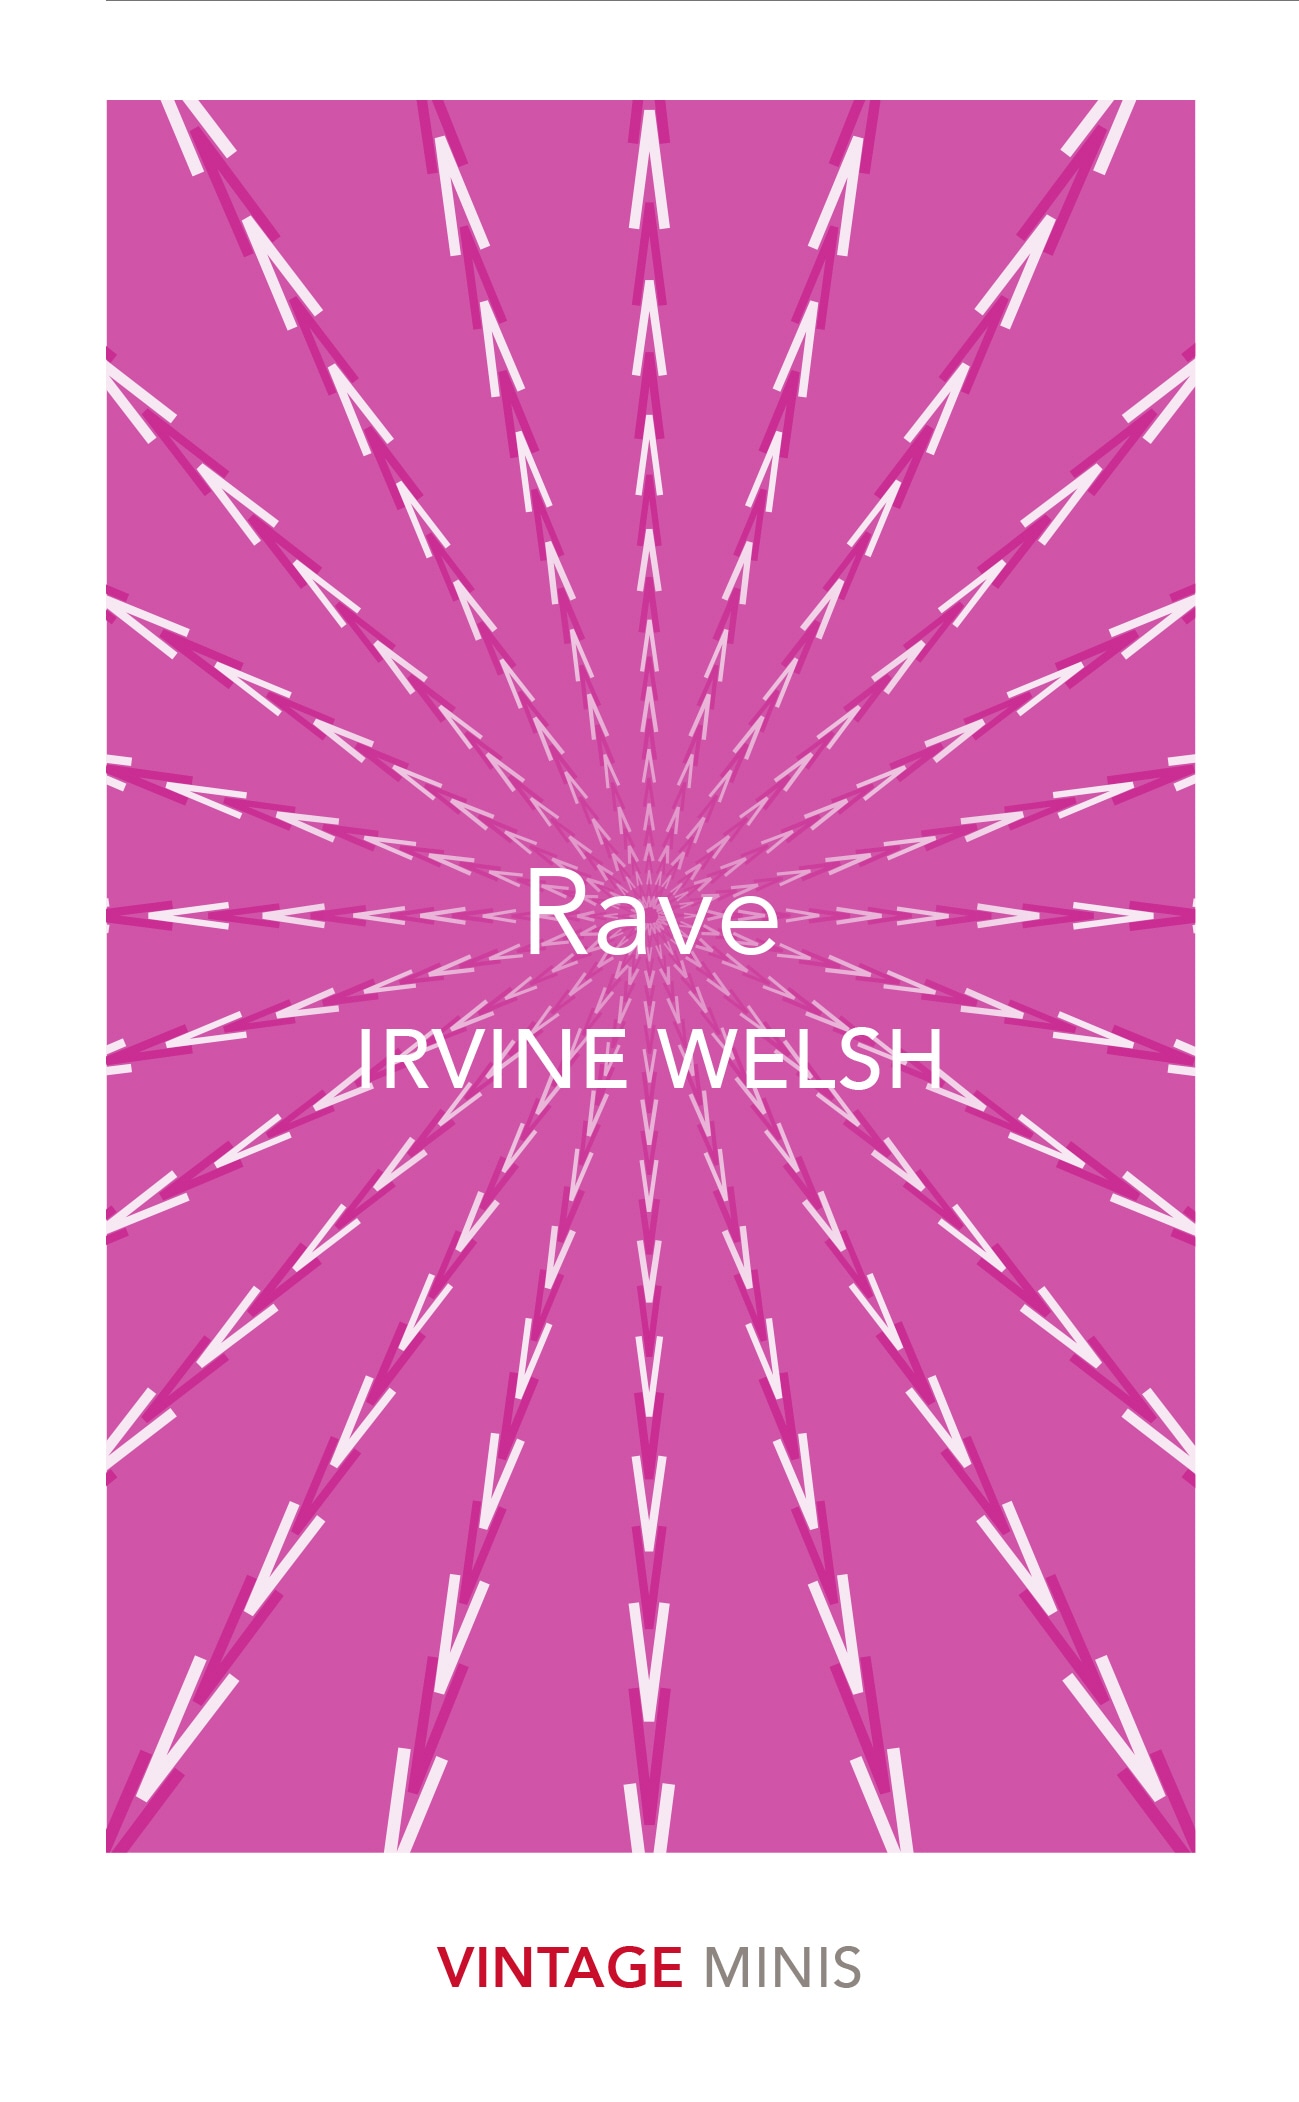 Book “Rave” by Irvine Welsh — April 5, 2018